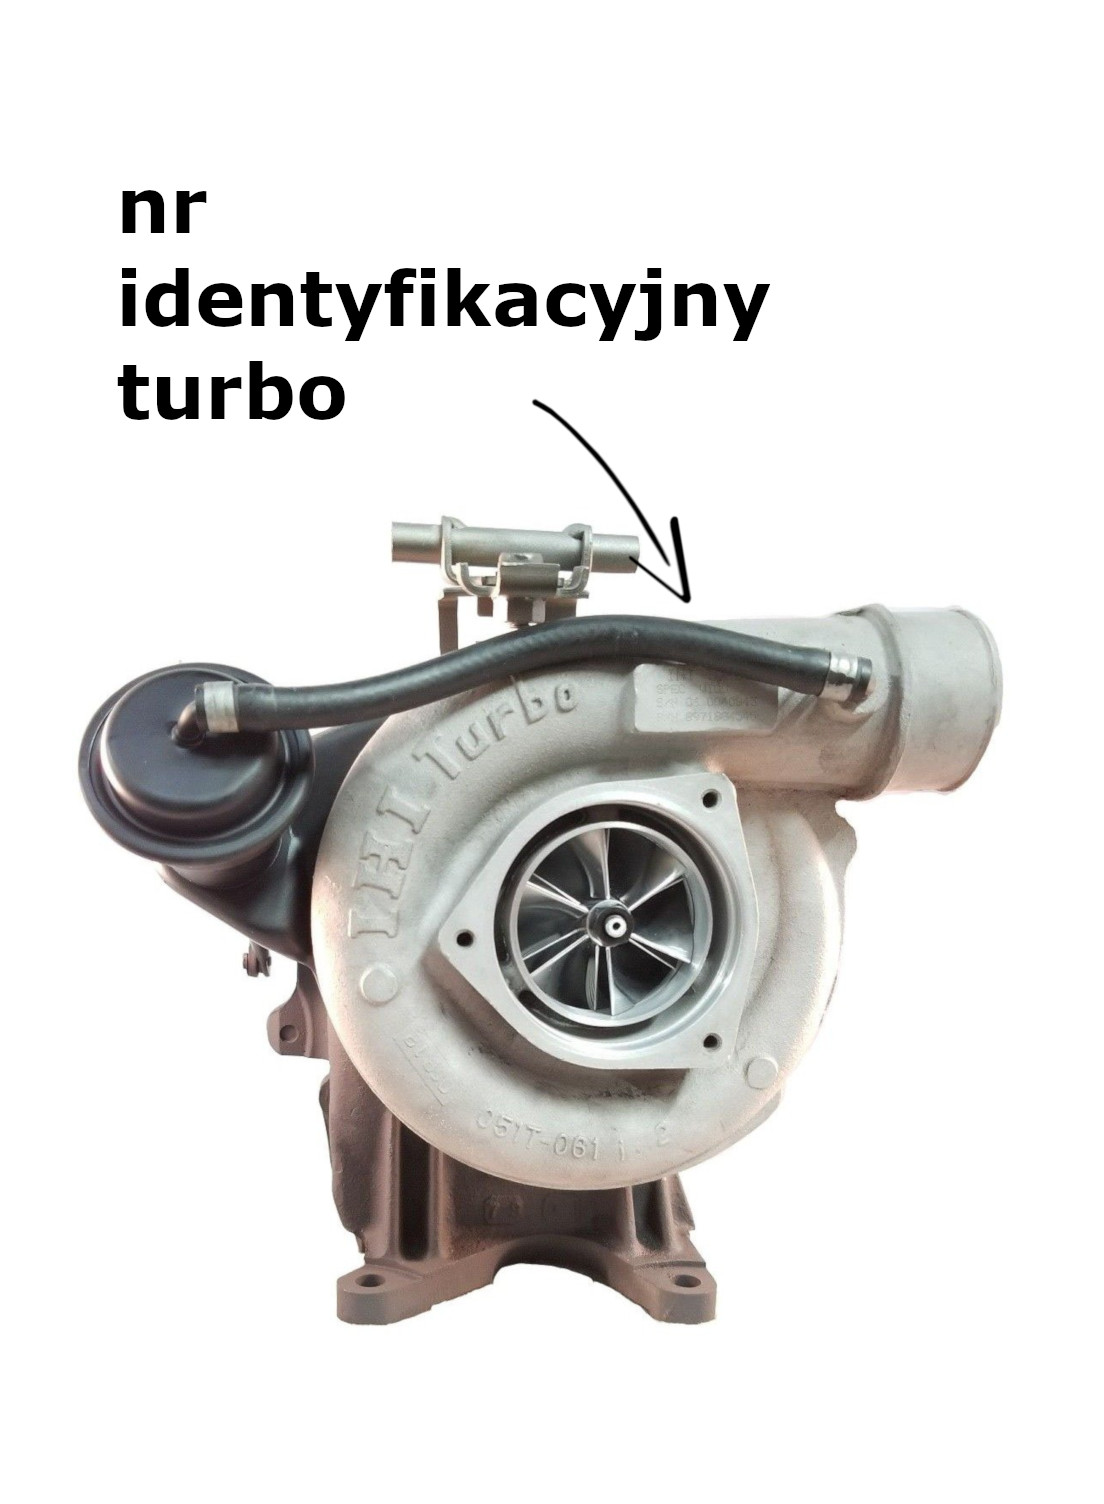 IHI identyfikacja turbo